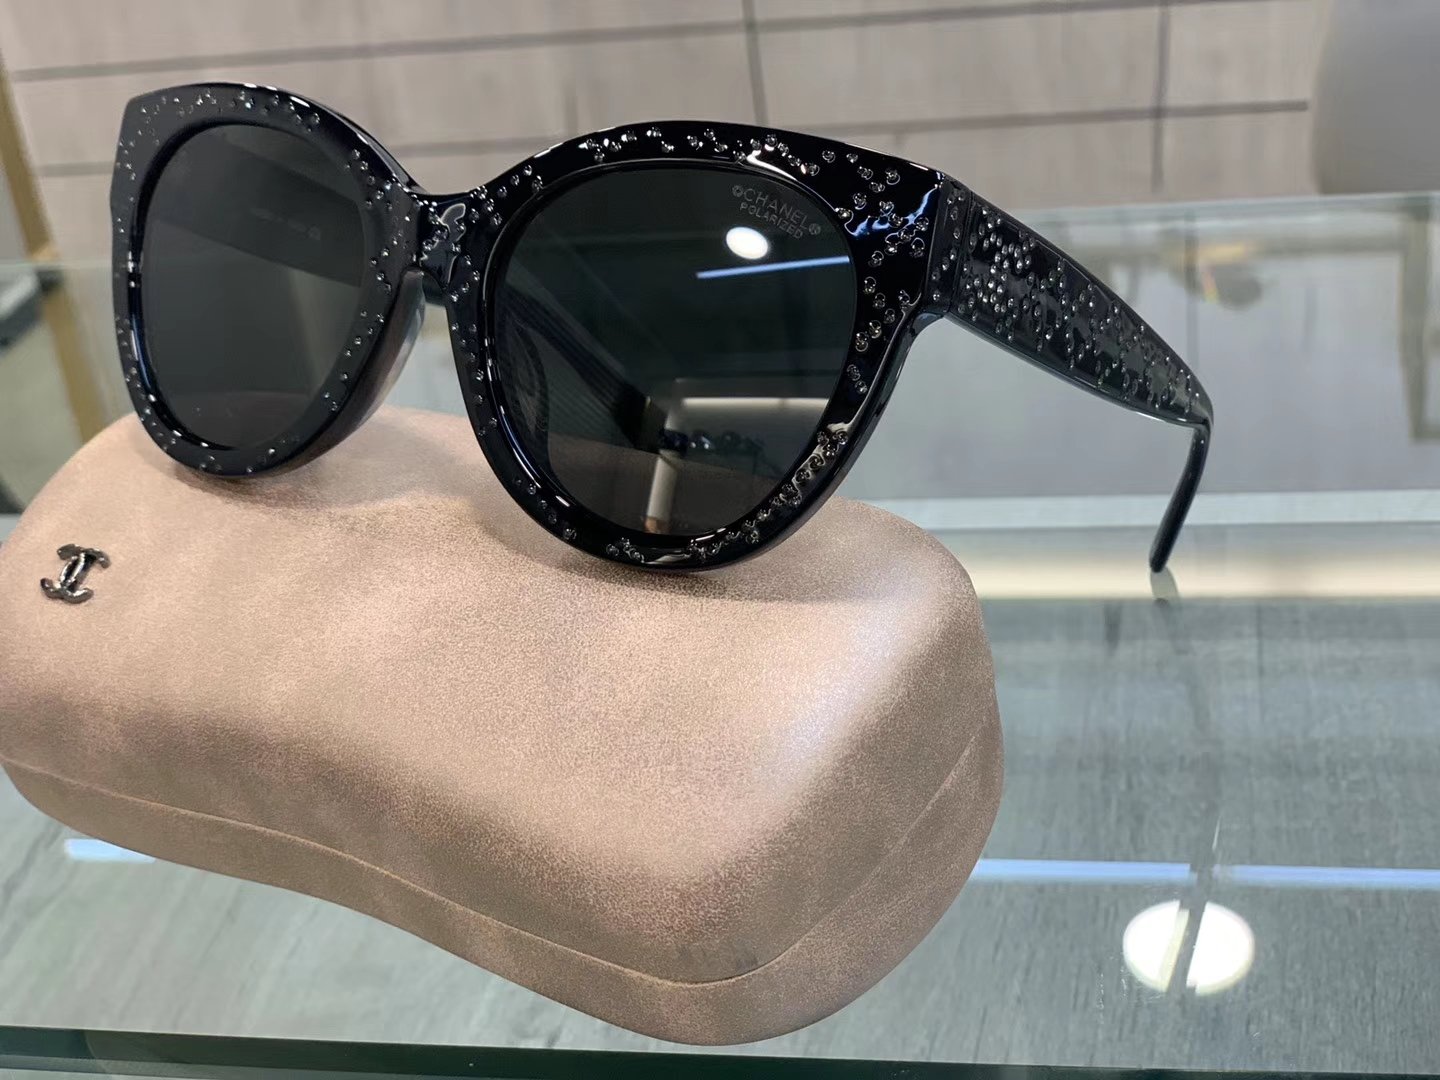 Mengotti Couture® Official Site | Chanel Sunglasses ButterflyGet Chanel  Butterfly Sunglasses at Discounted Rates